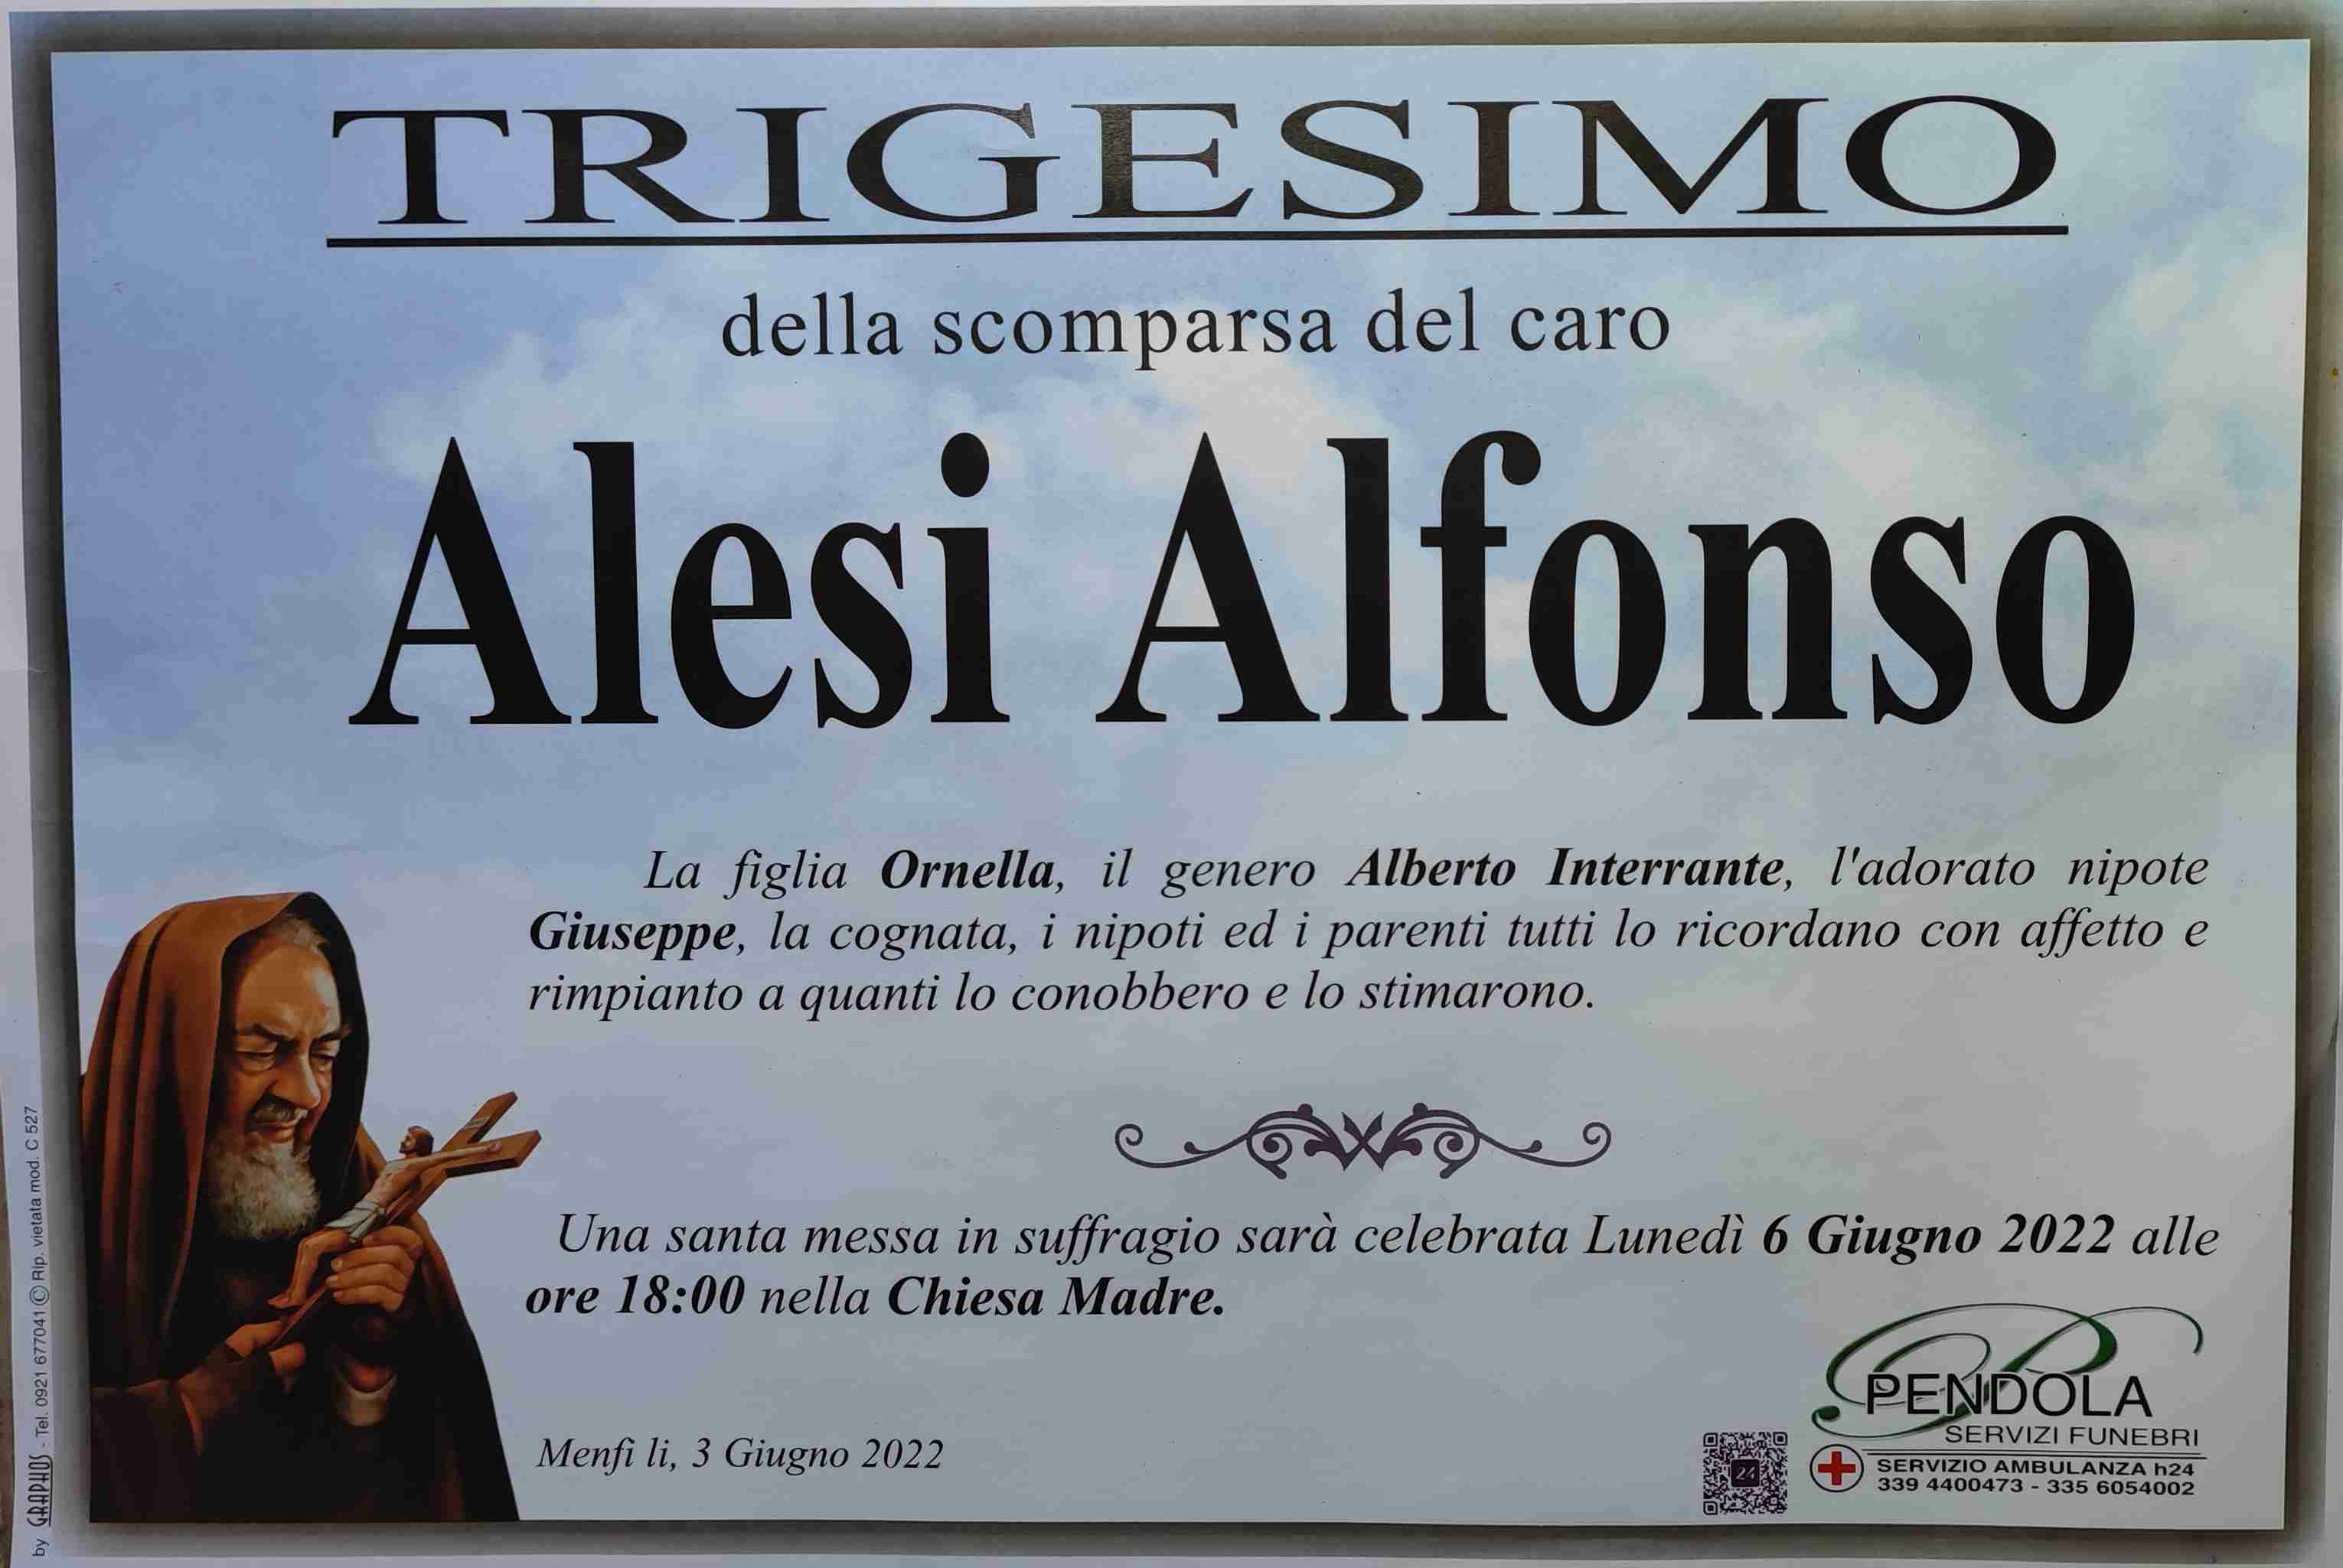 Alfonso Alesi